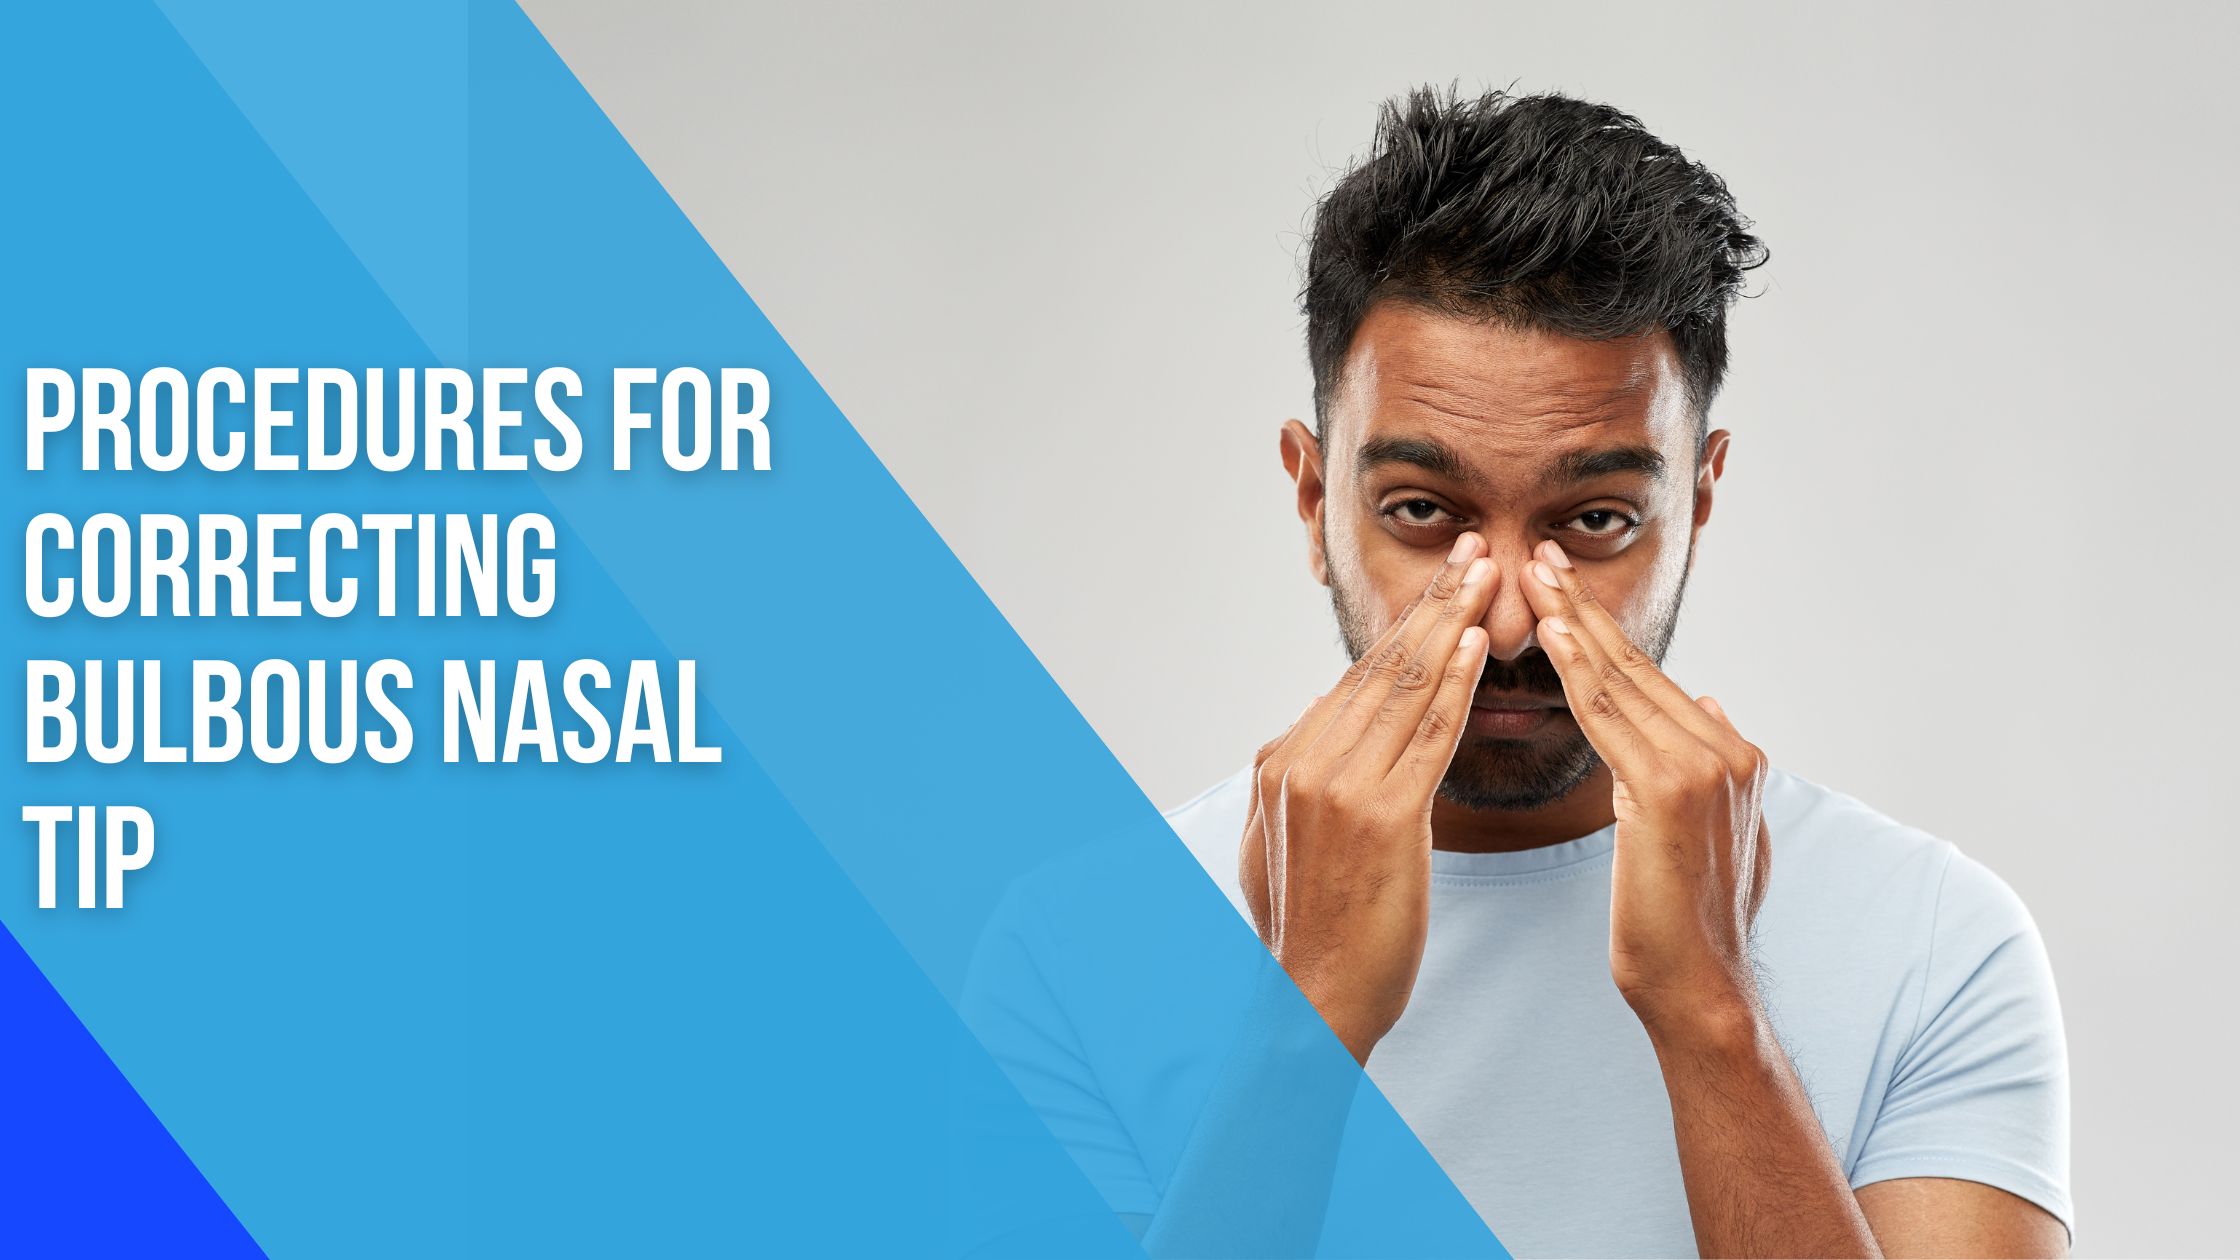 Procedures for correcting Bulbous Nasal Tip